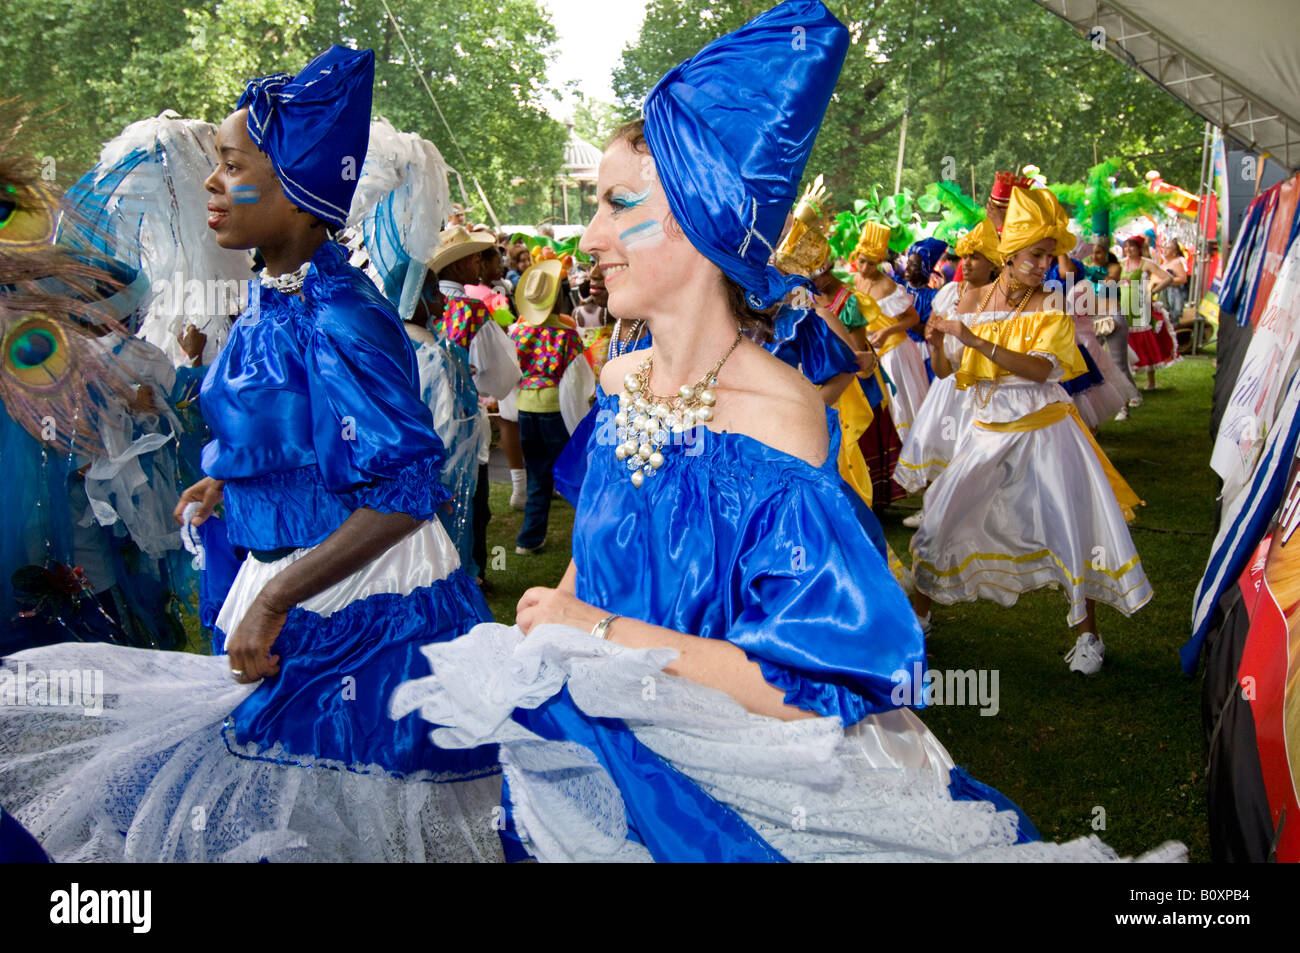 Kubanischen Conga Prozession Karneval de Kuba London. Tänzer in Kostümen der Afro-kubanischen Orishas (Heiligen). Stockfoto